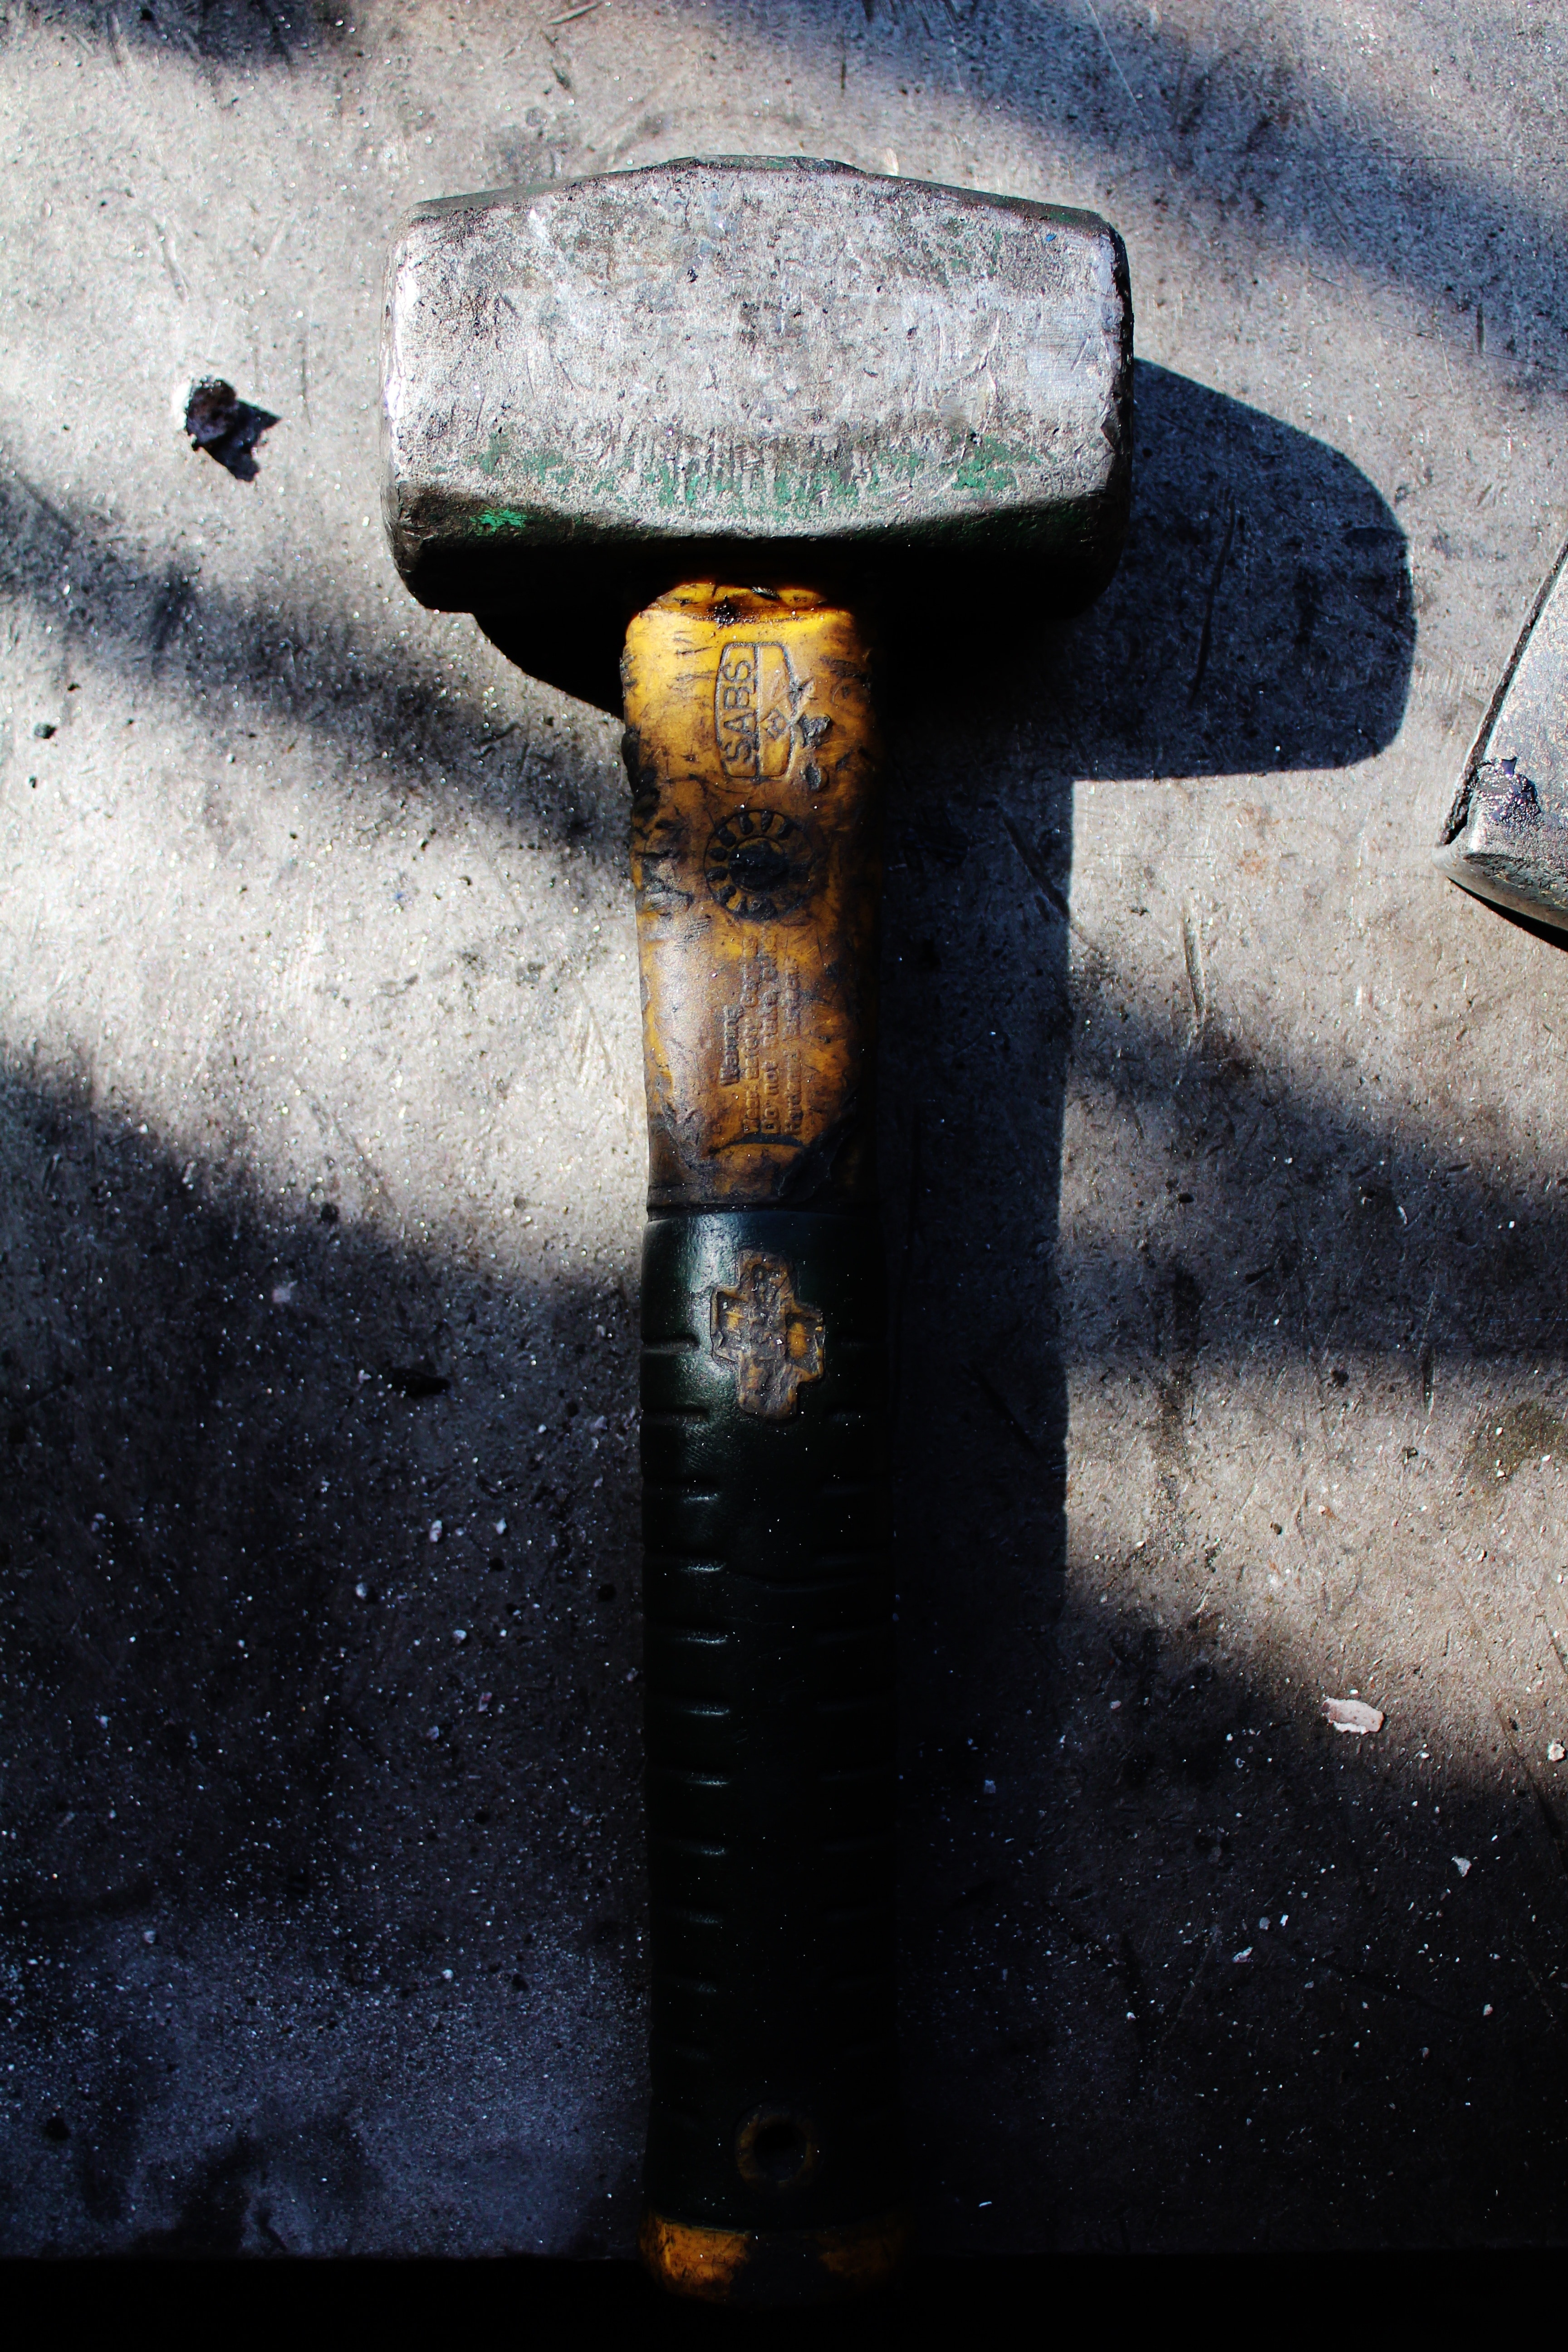 grey and yellow sledge hammer